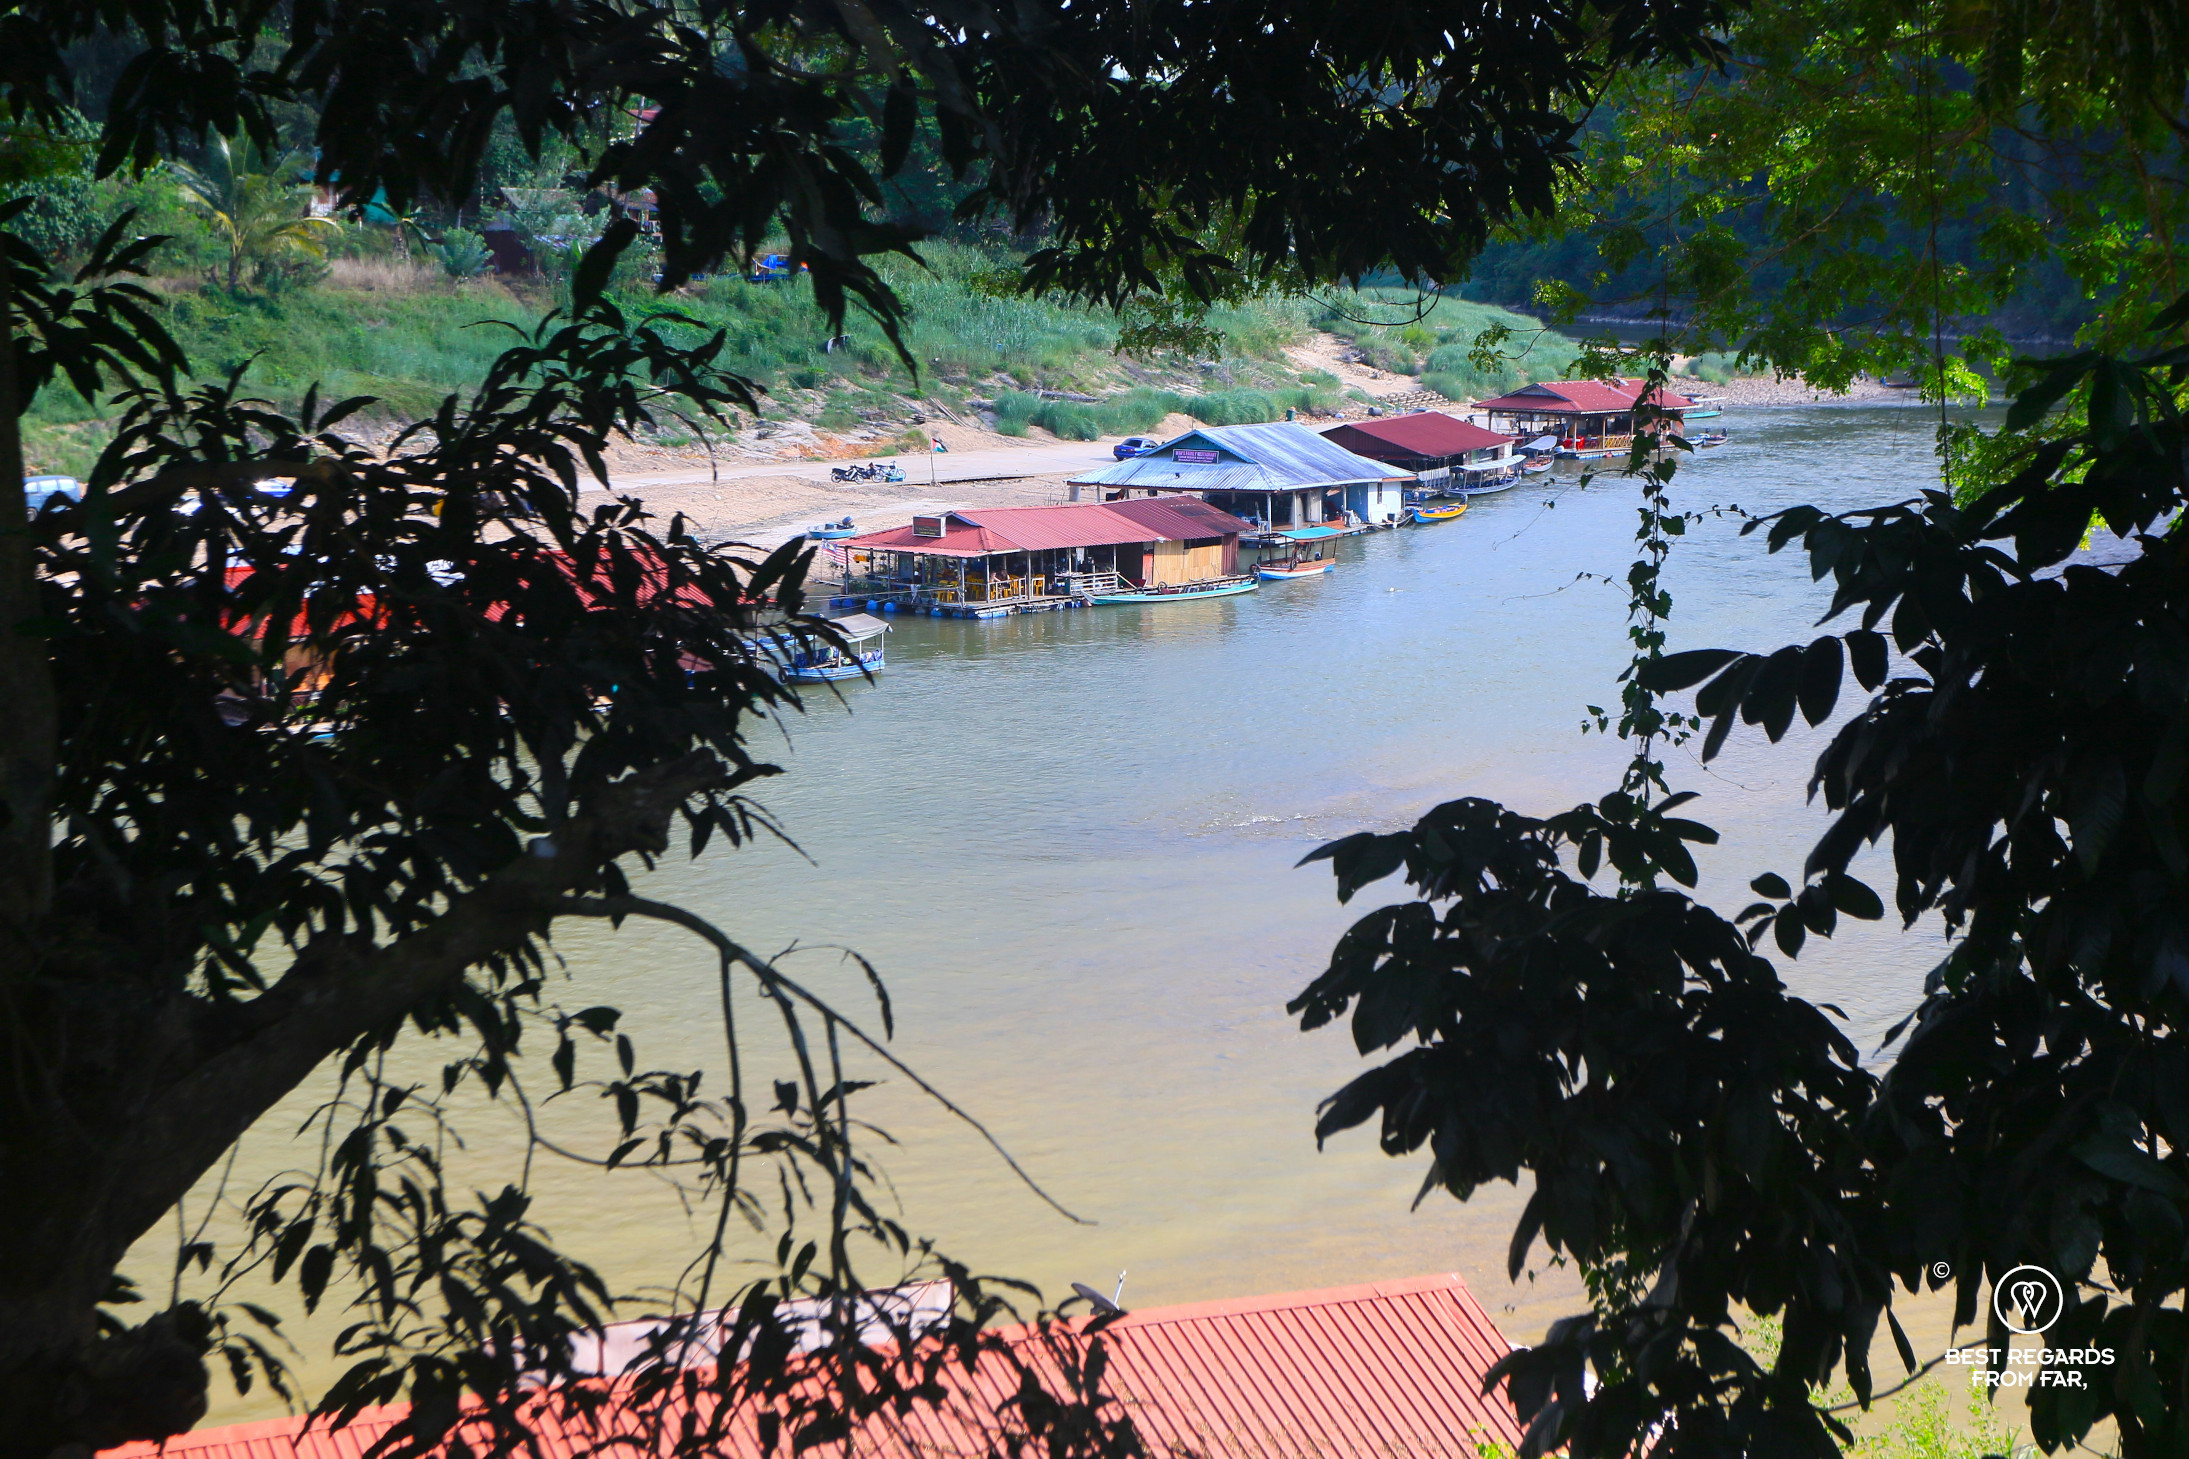 Floating houses on the Tembeling River of the settlement Kualah Tahan.